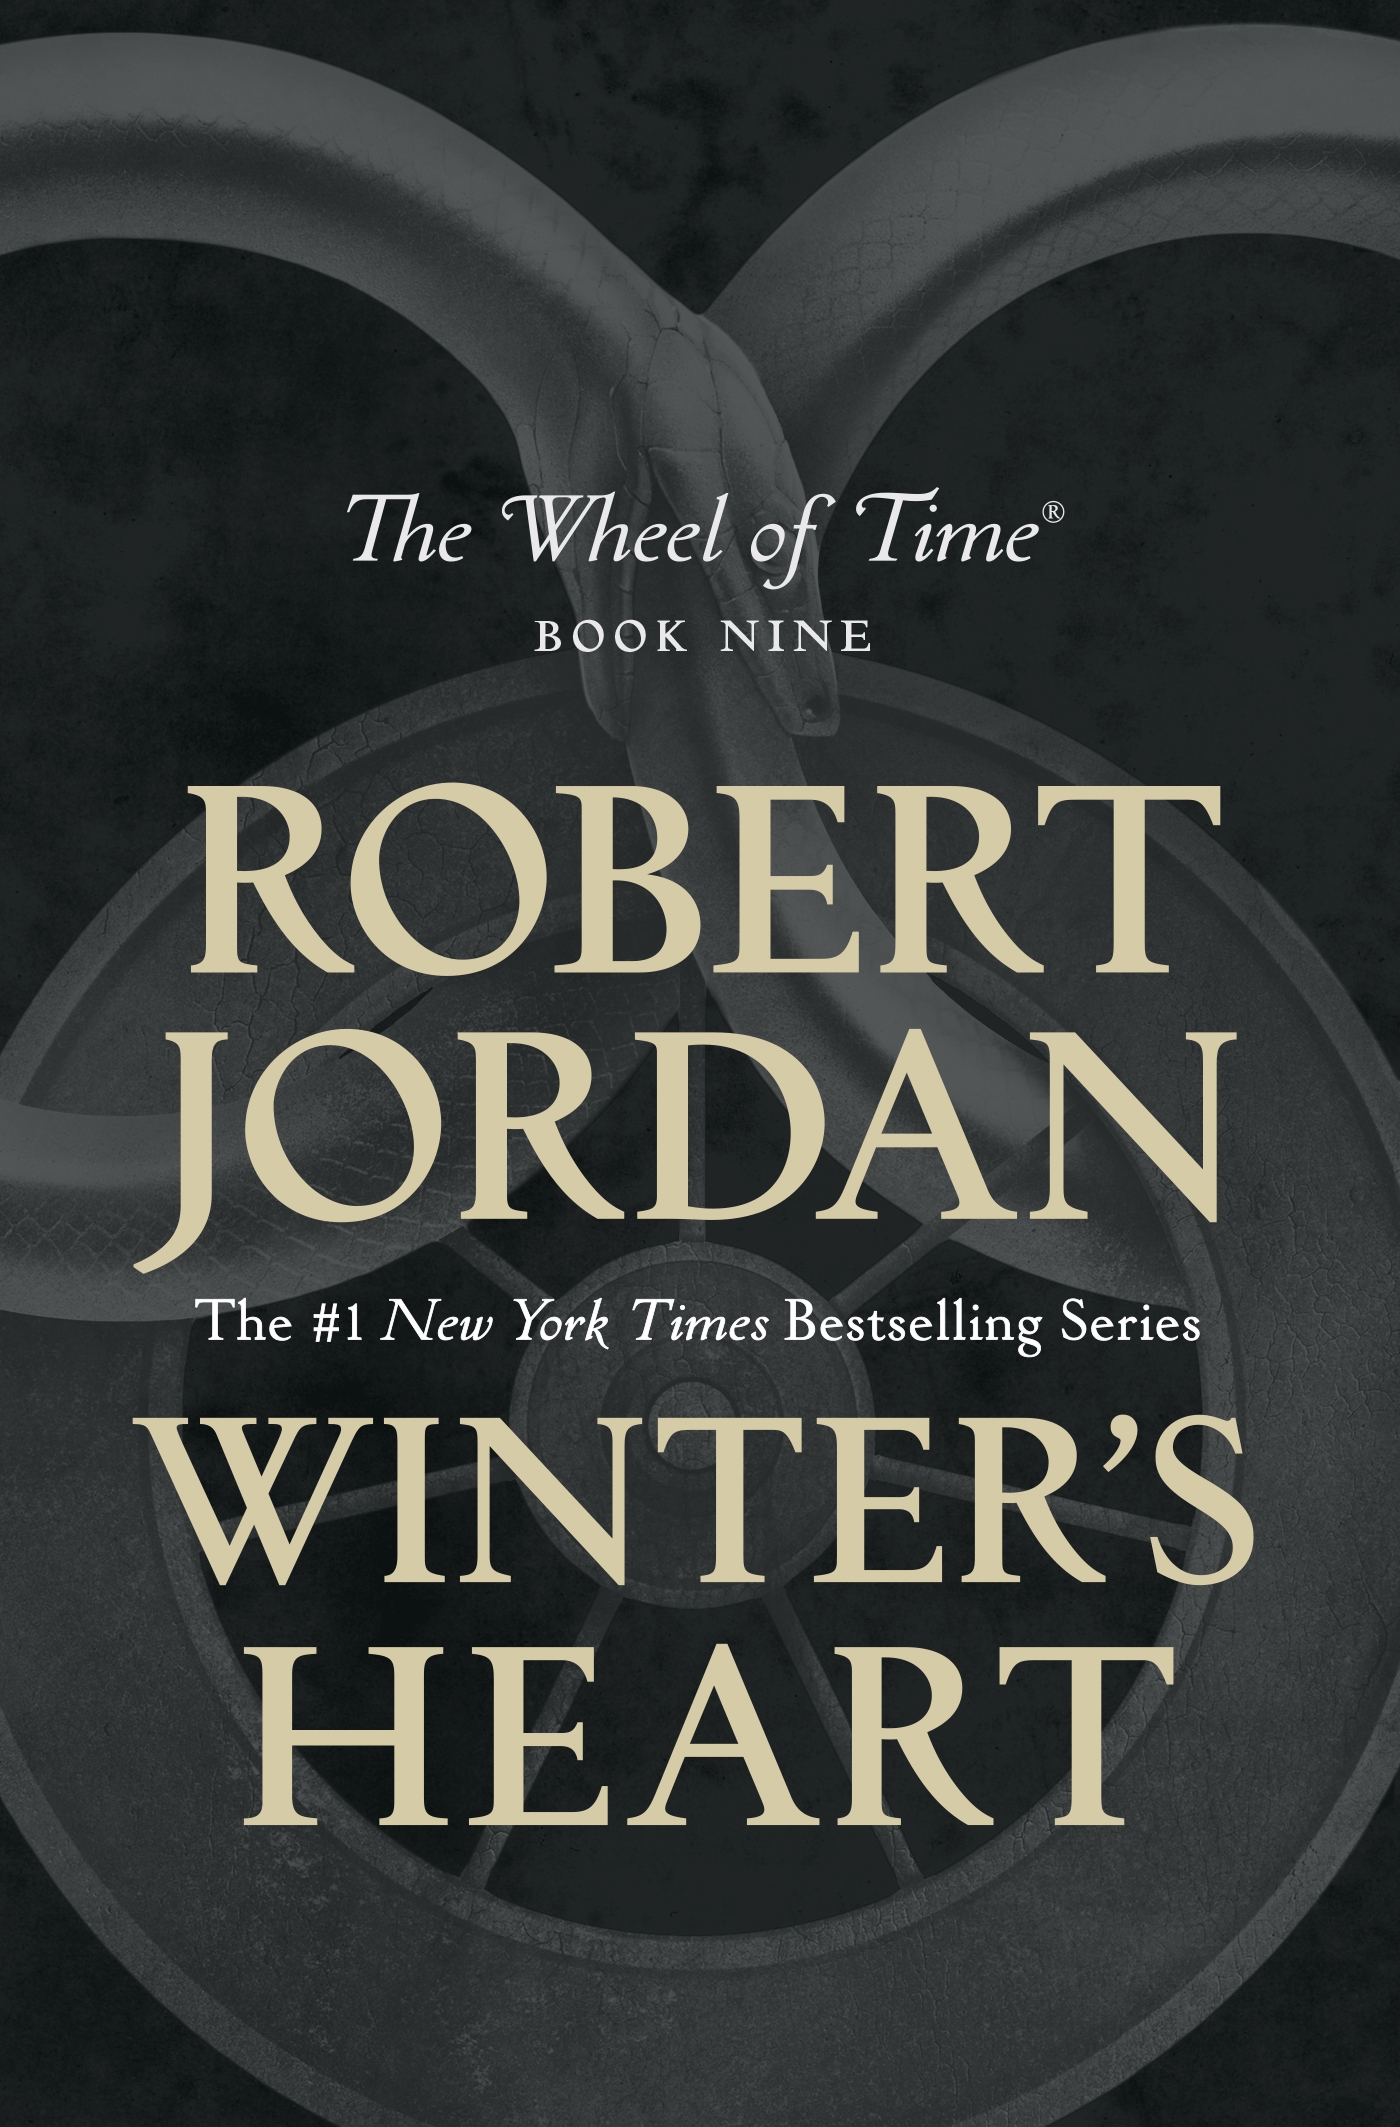 Book “Winter's Heart” by Robert Jordan — February 25, 2020